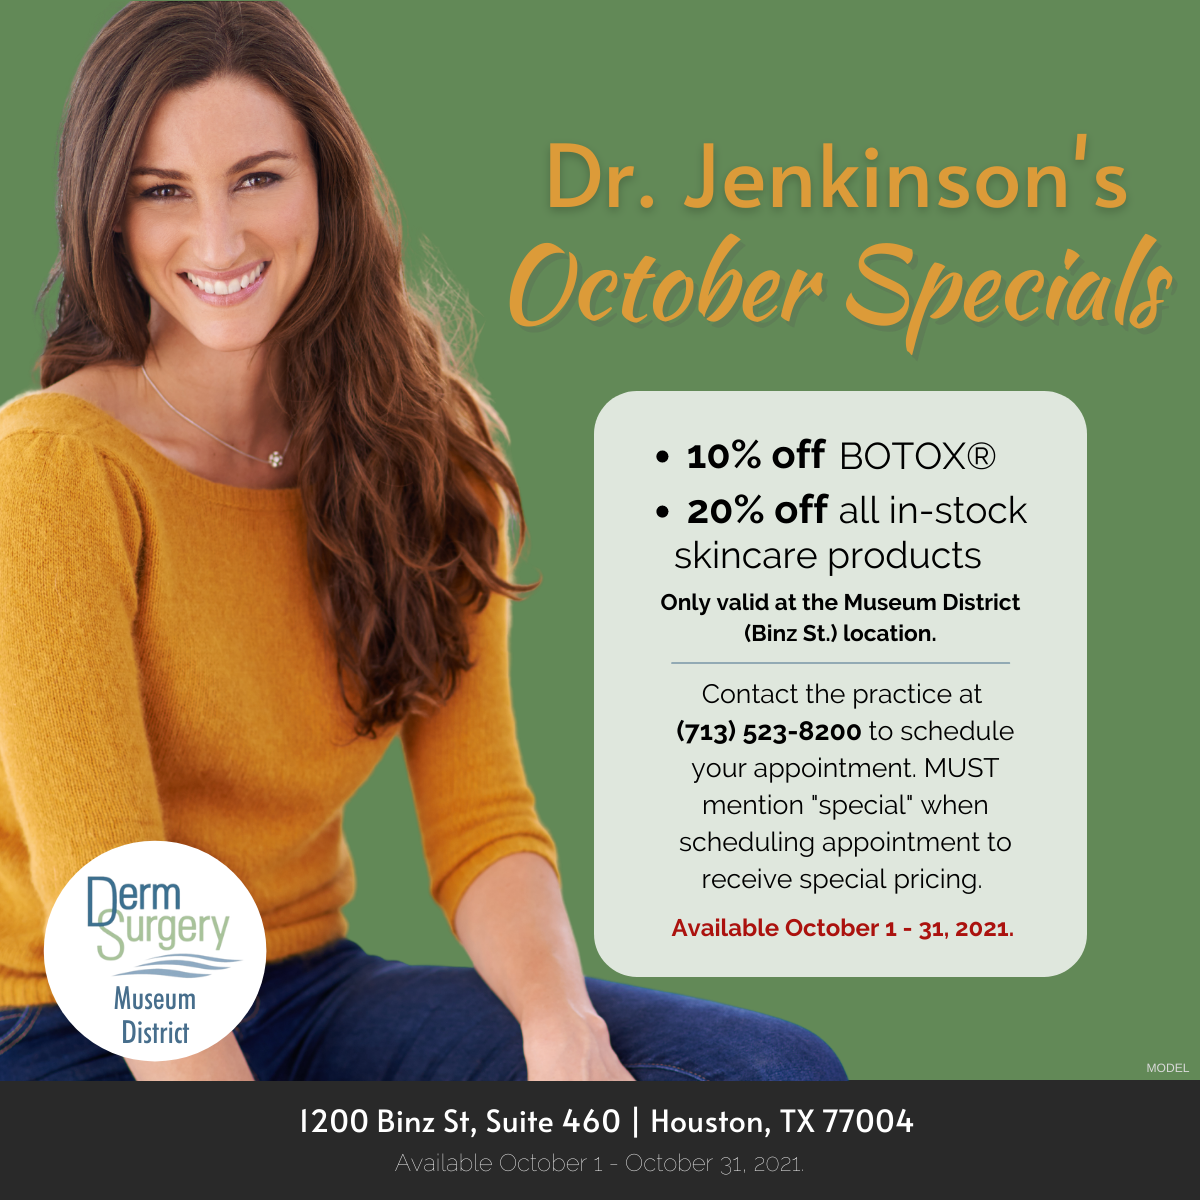 Dr. Jenkinson's October Specials